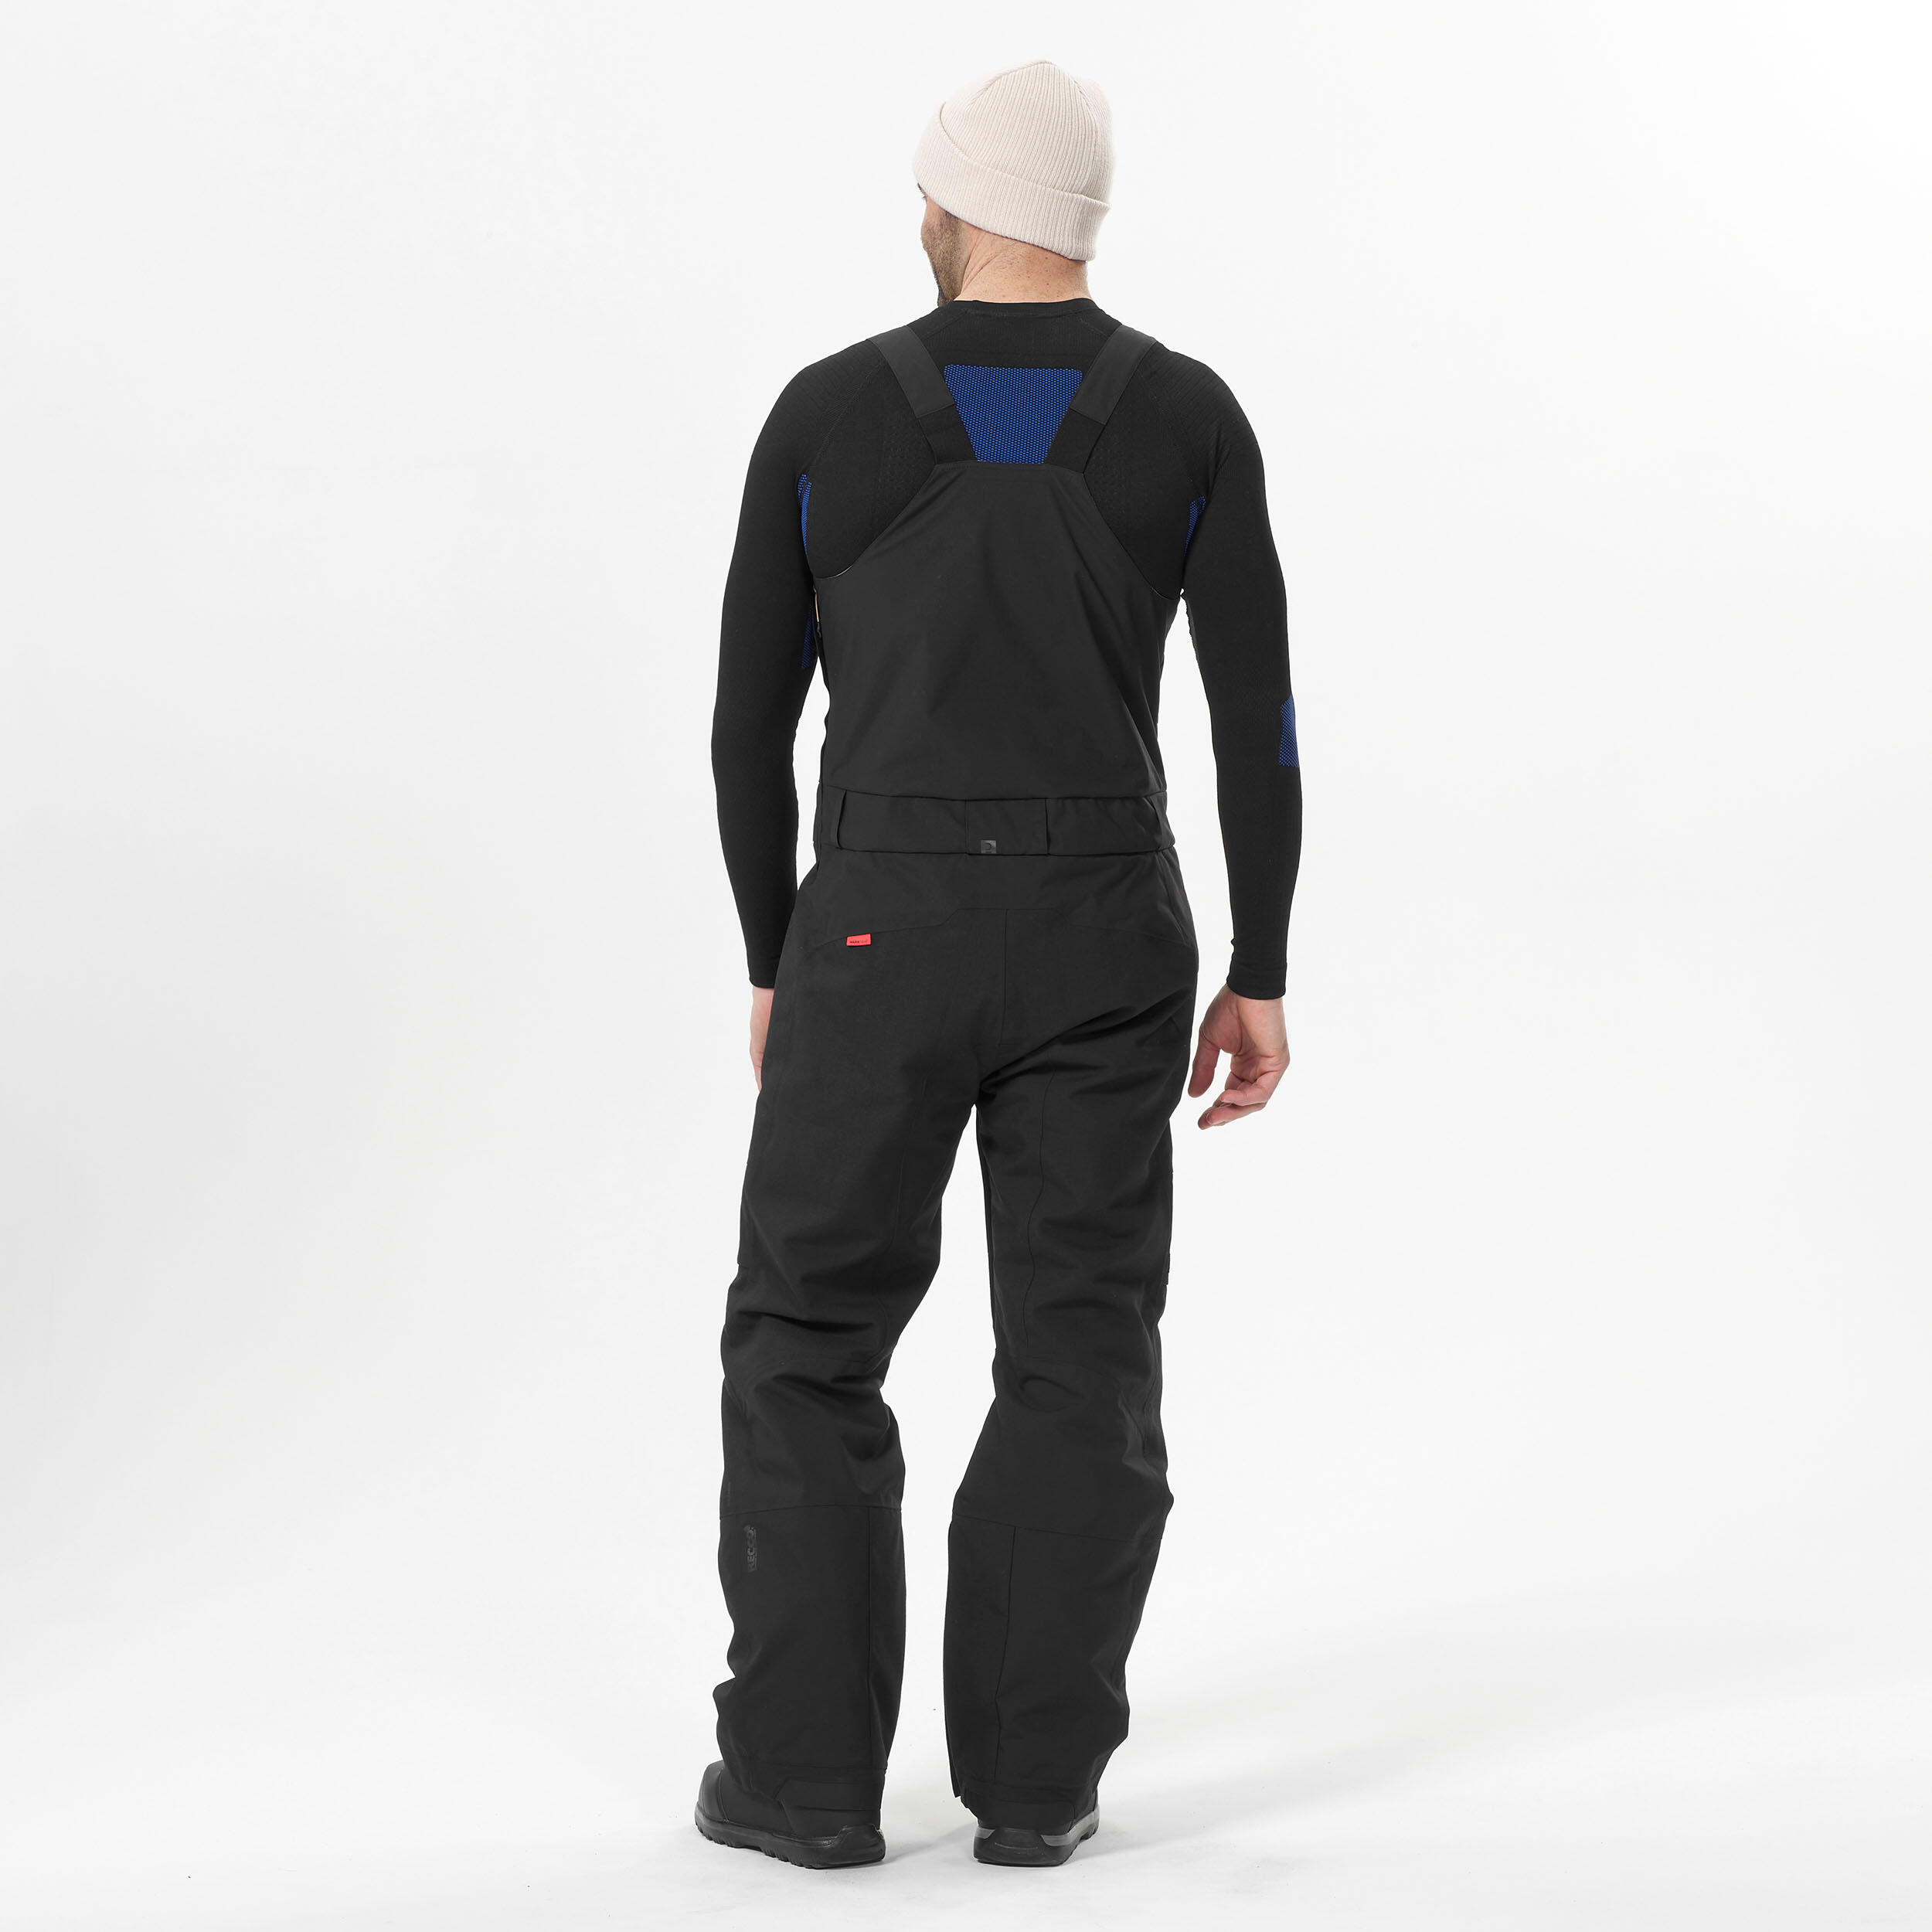 Men's Winter Bib Pants – SNB 900 Black